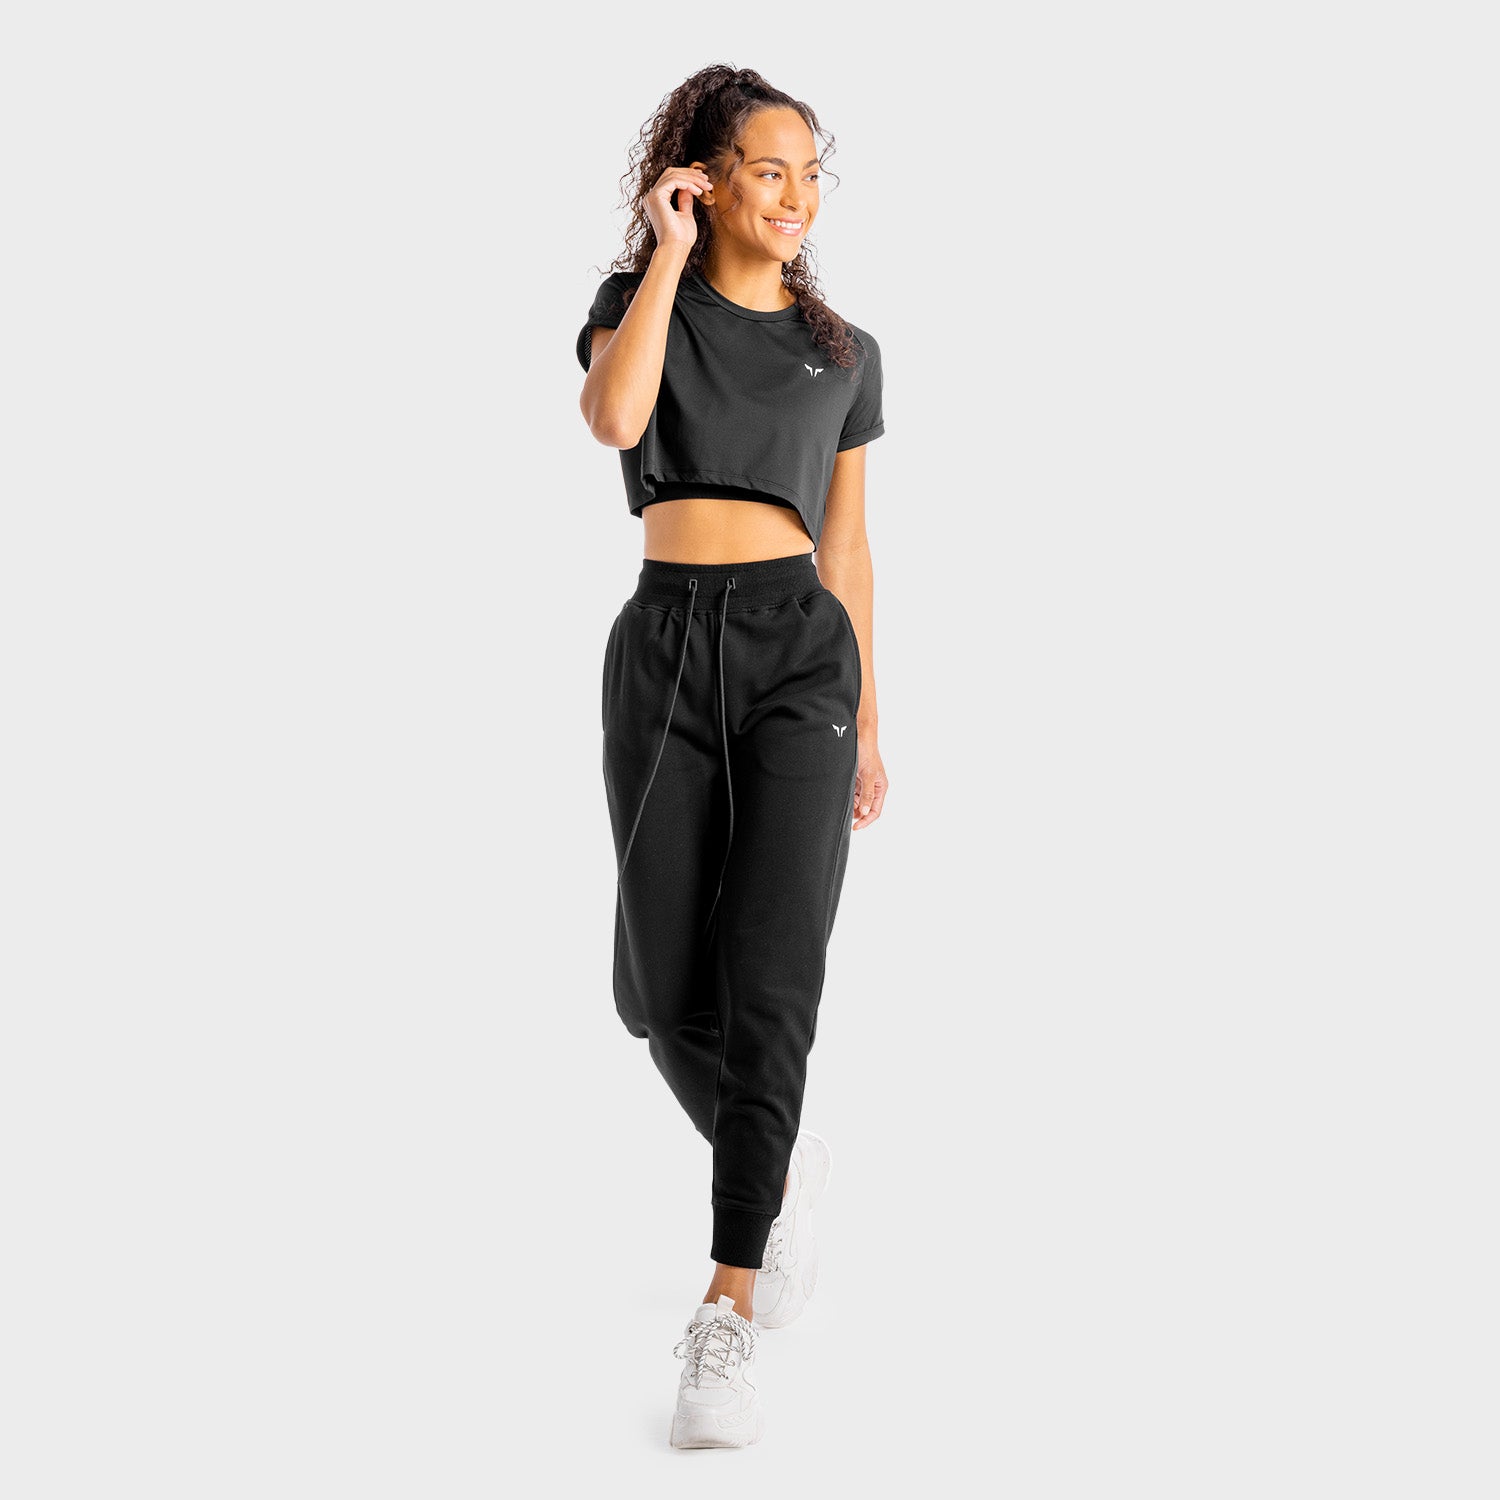 squatwolf-gym-pants-for-women-core-oversize-joggers-black-workout-clothes